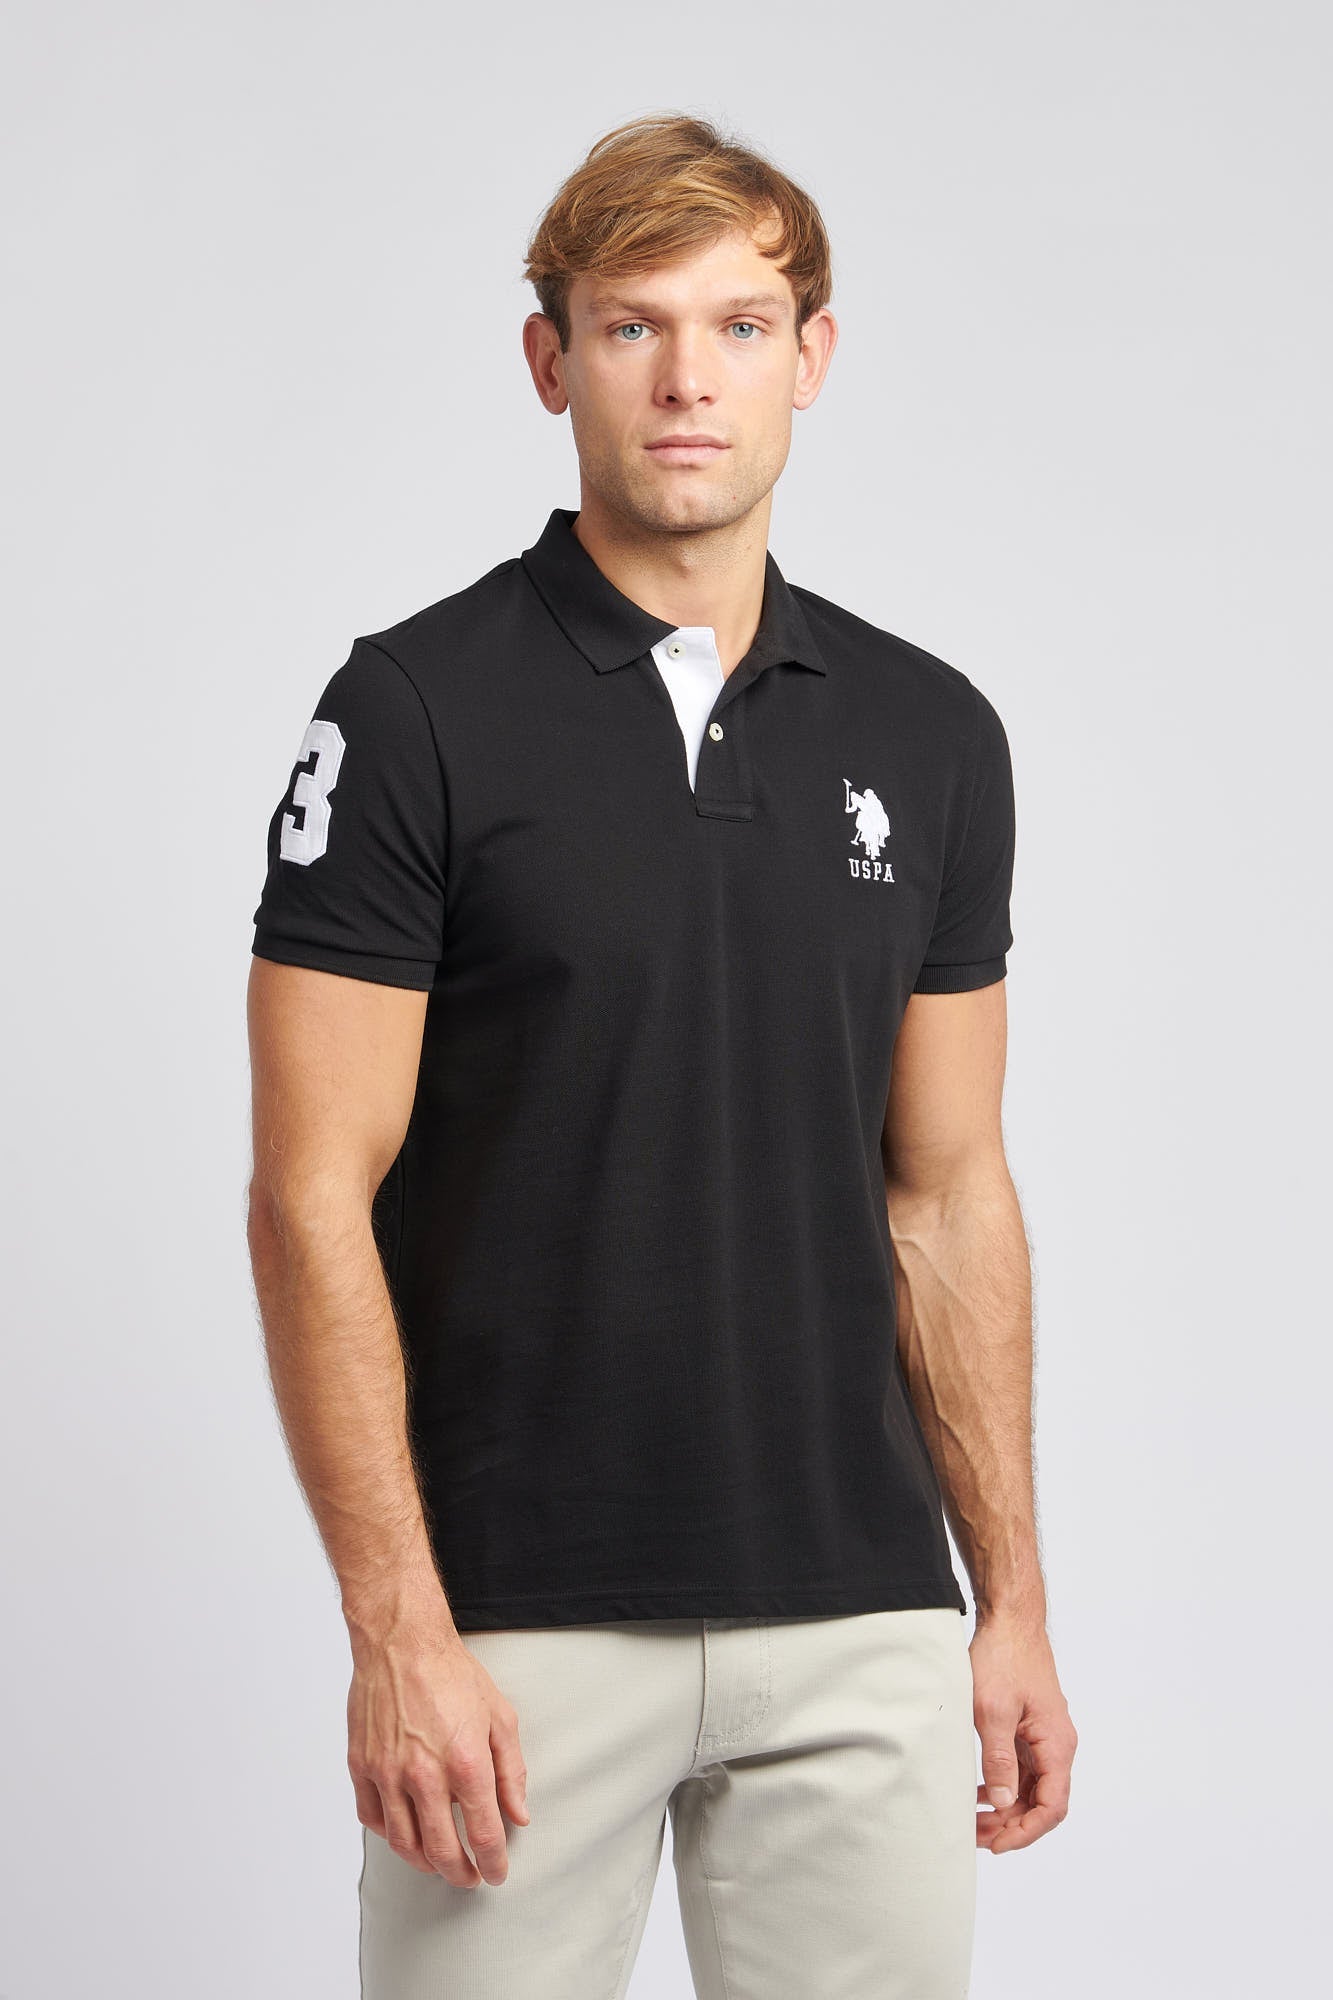 U.S. Polo Assn. Mens Player 3 Pique Polo Shirt in Black Bright White DHM